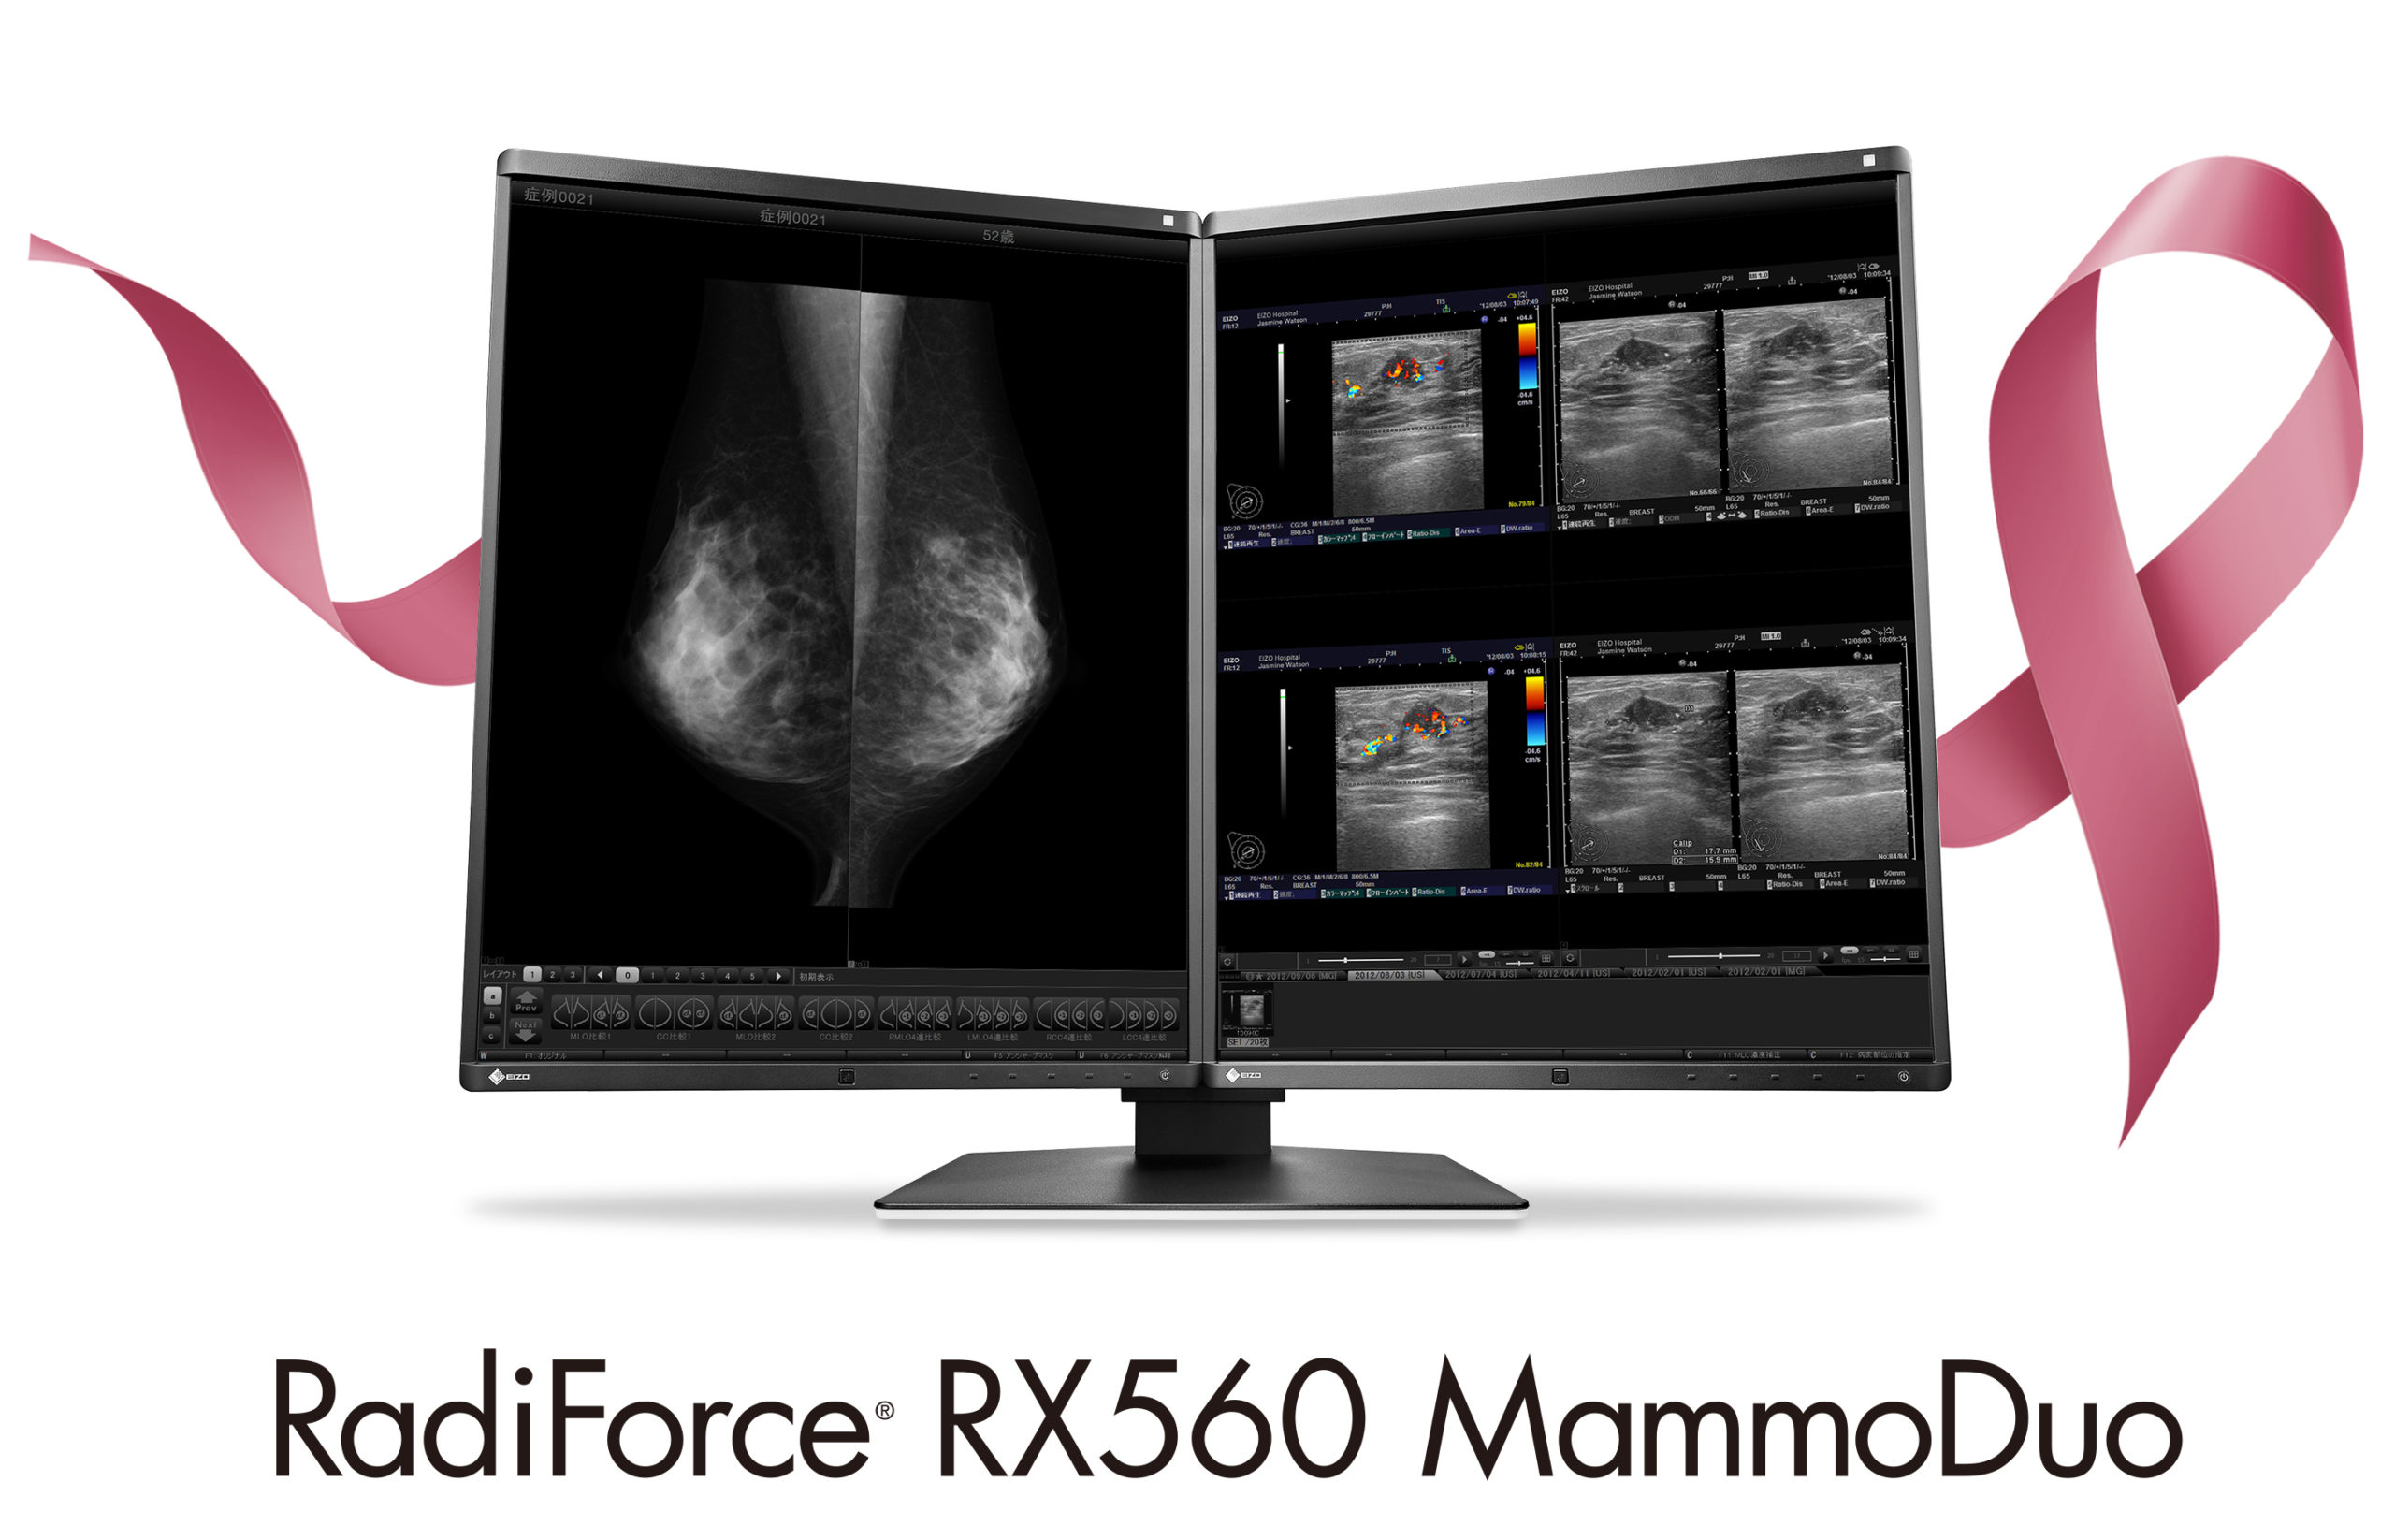 RadiForce RX560 MammoDuo